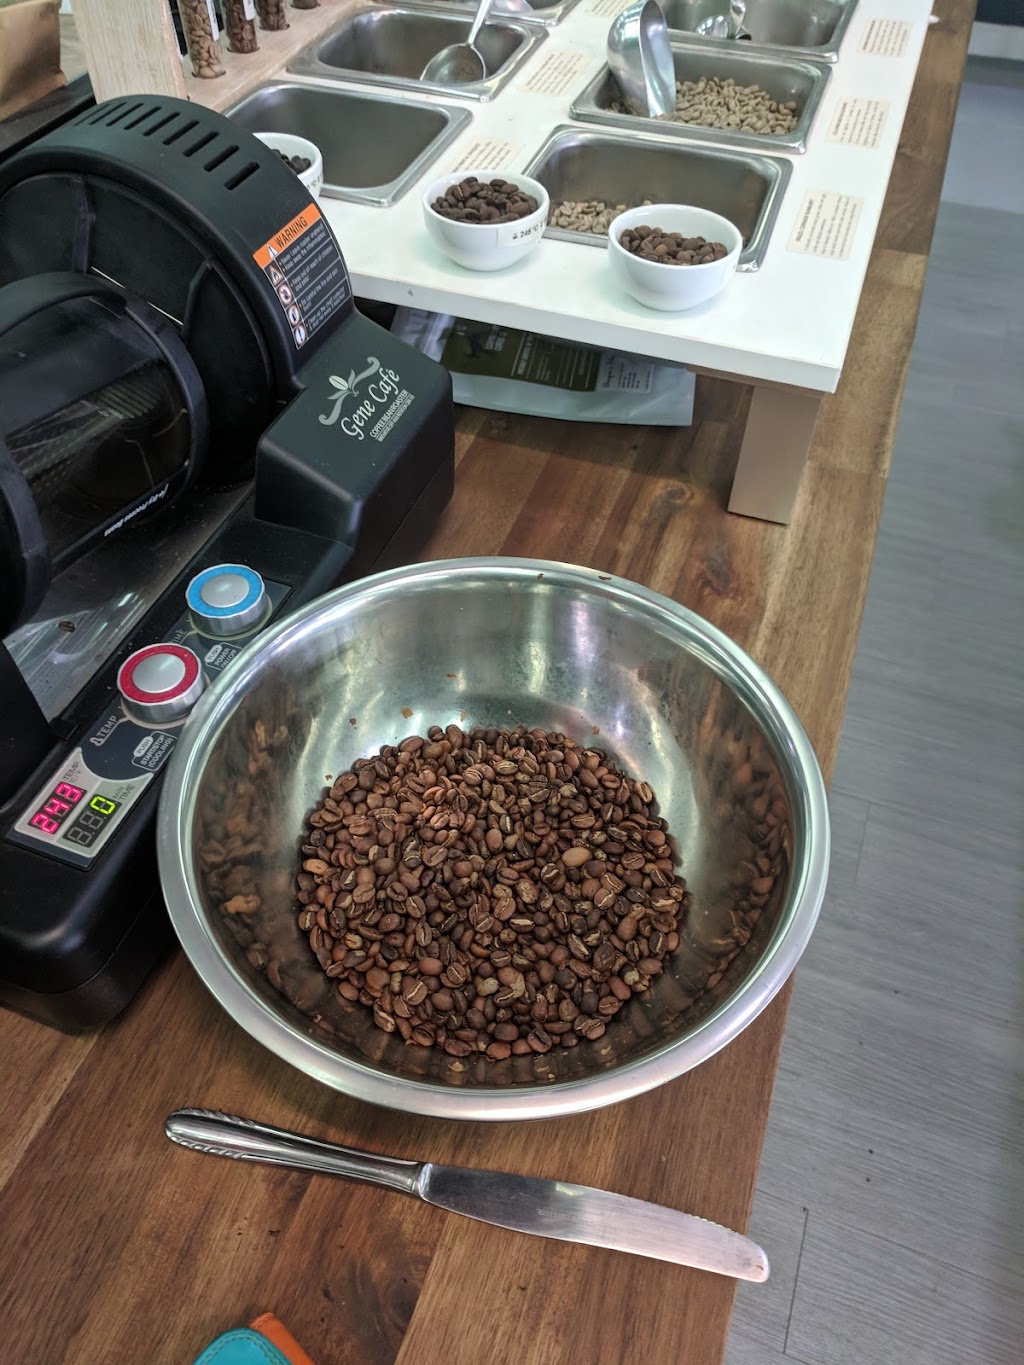 Leaping Goat Coffee | cafe | 2 Ferguson Dr, Quoiba TAS 7310, Australia | 0499555177 OR +61 499 555 177